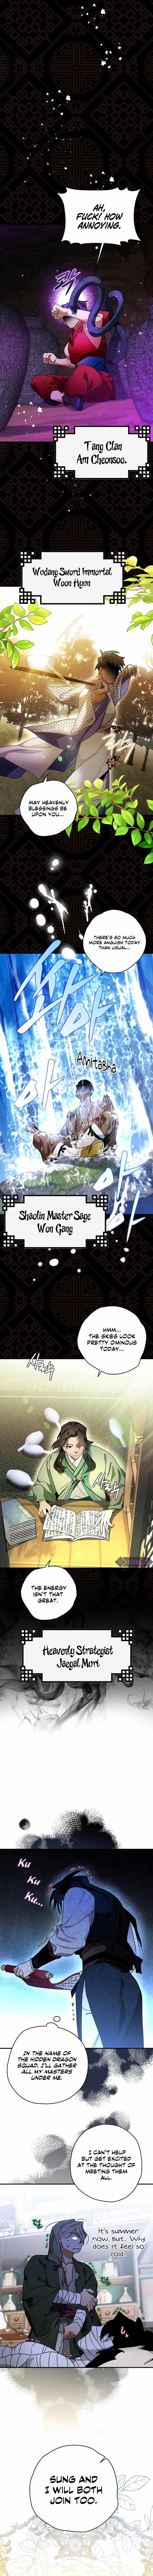 Heavenly Sword's Grand Saga Heavenly Sword's Grand Saga Ch.040